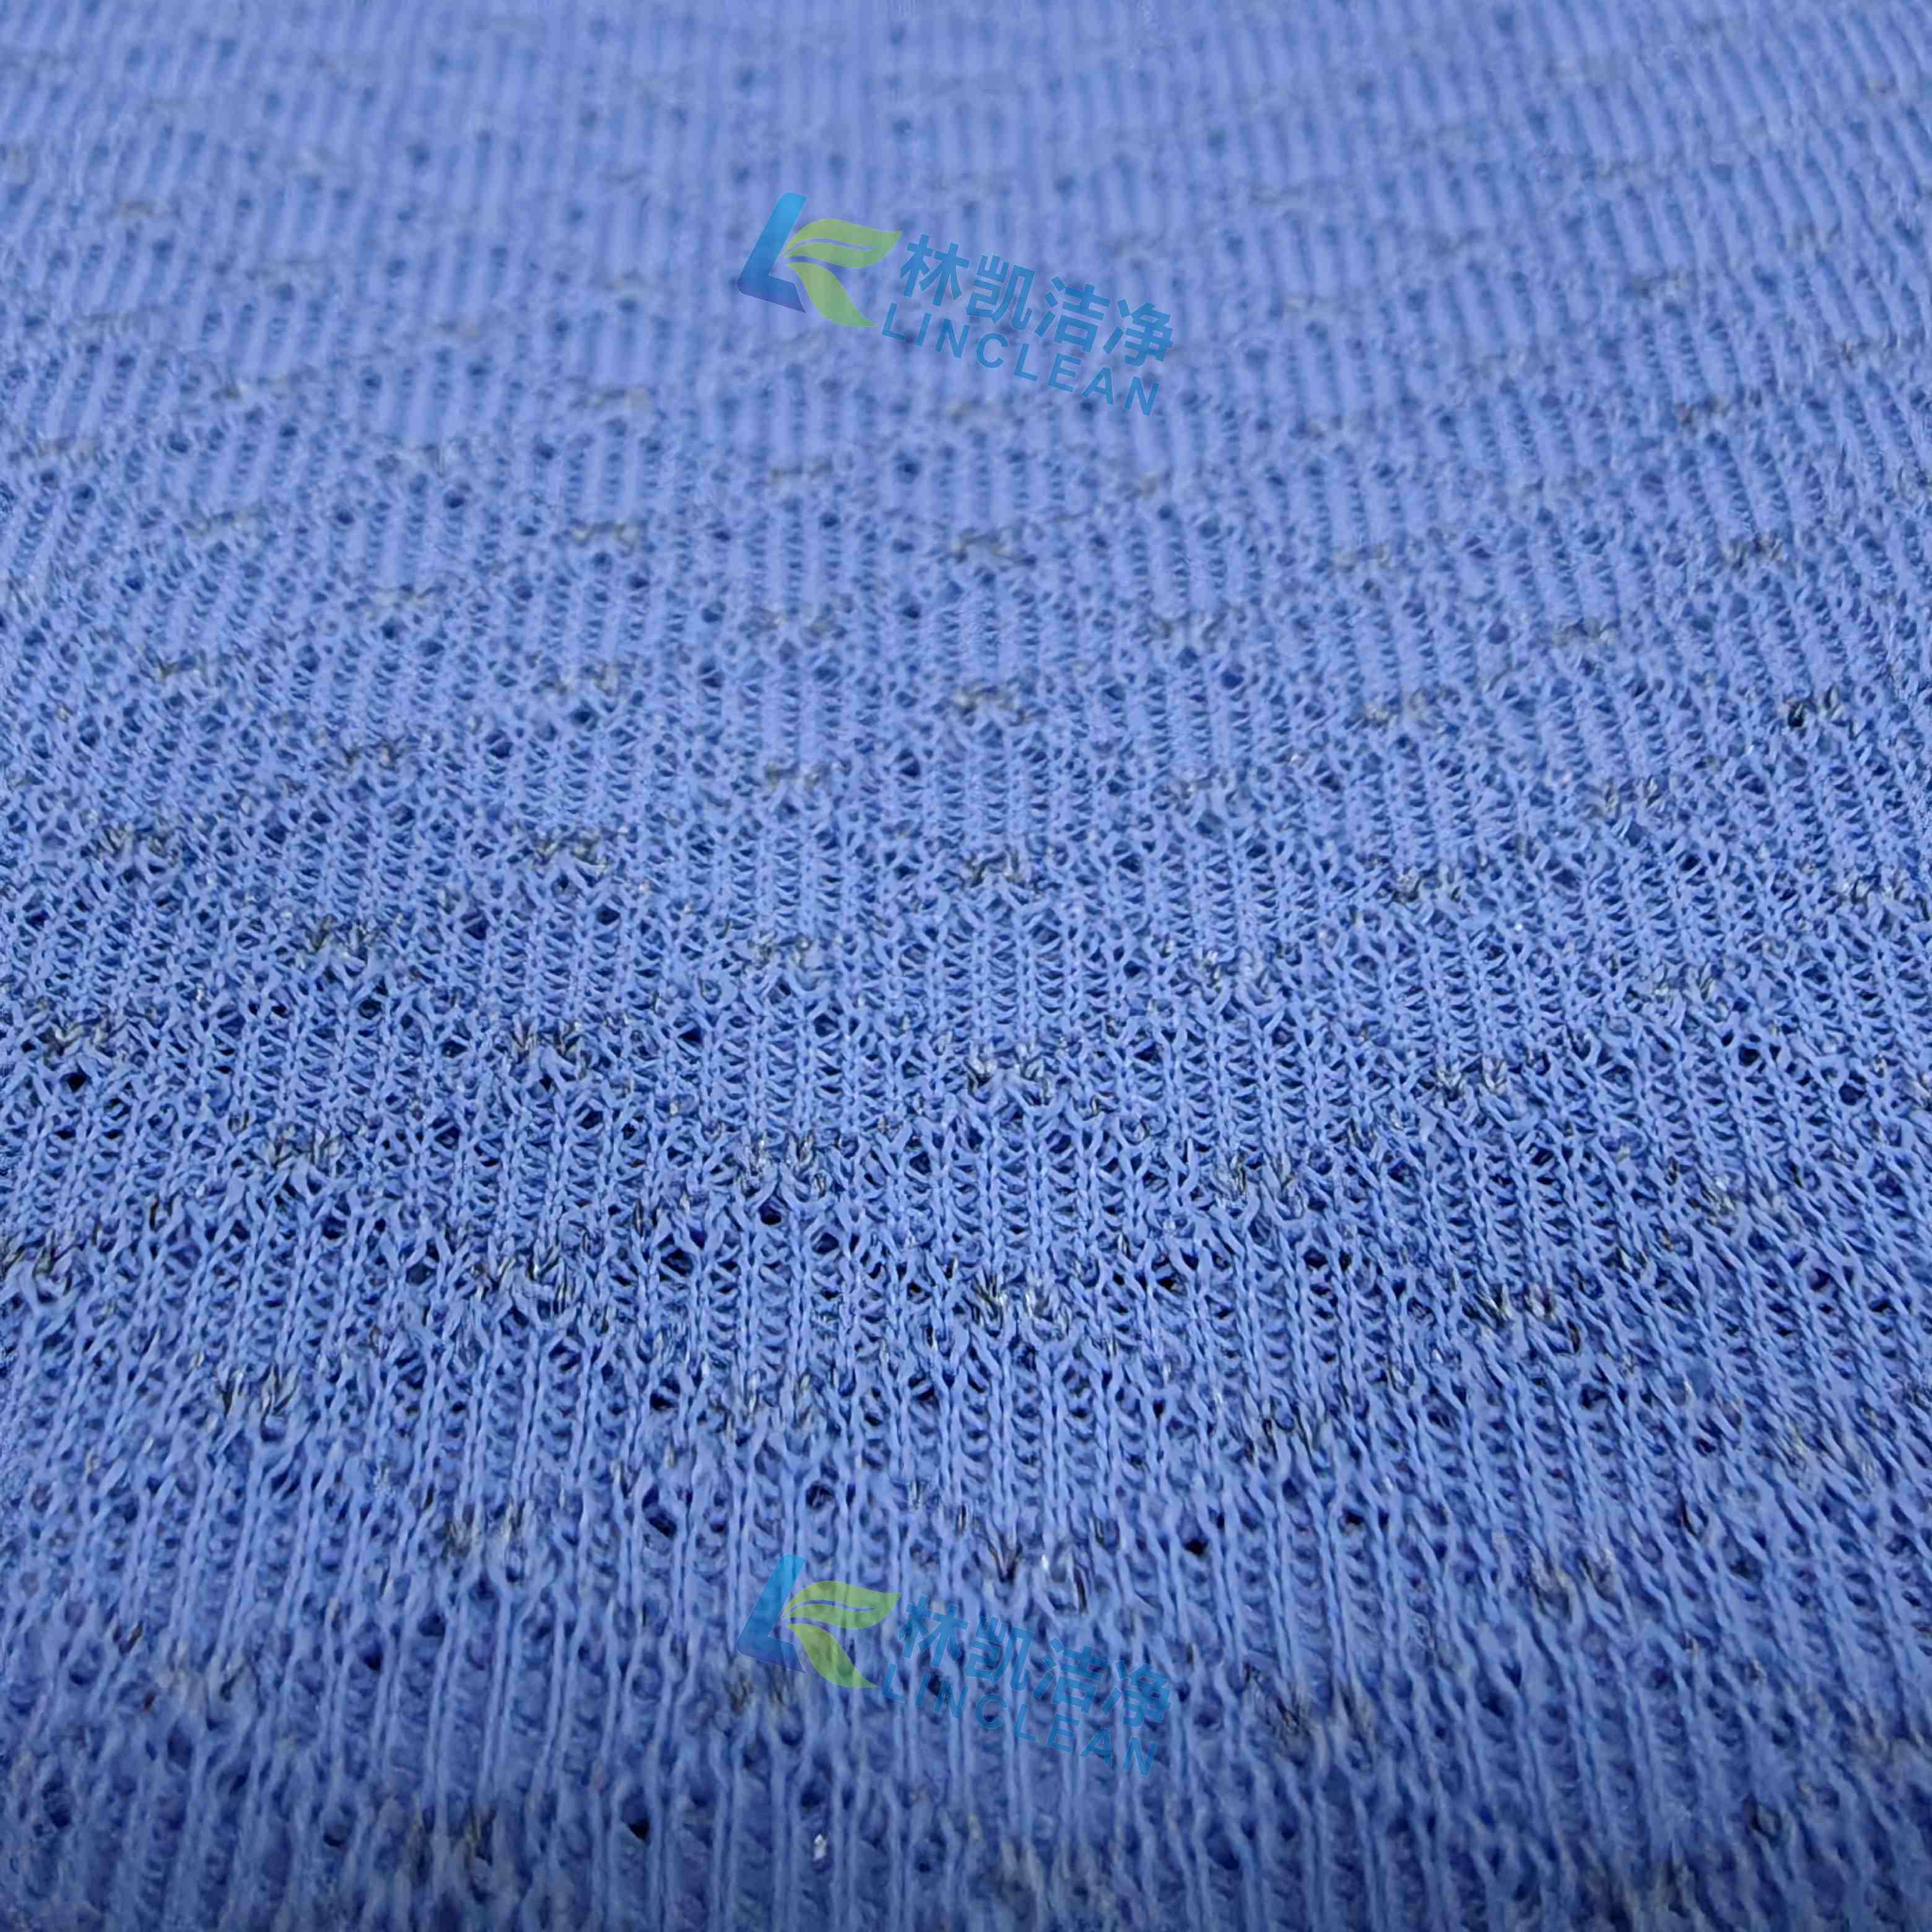 Long Sleeve Unisex Anti Static Cleanroom Diamond Knitted Lab Jacket ESD Uniform